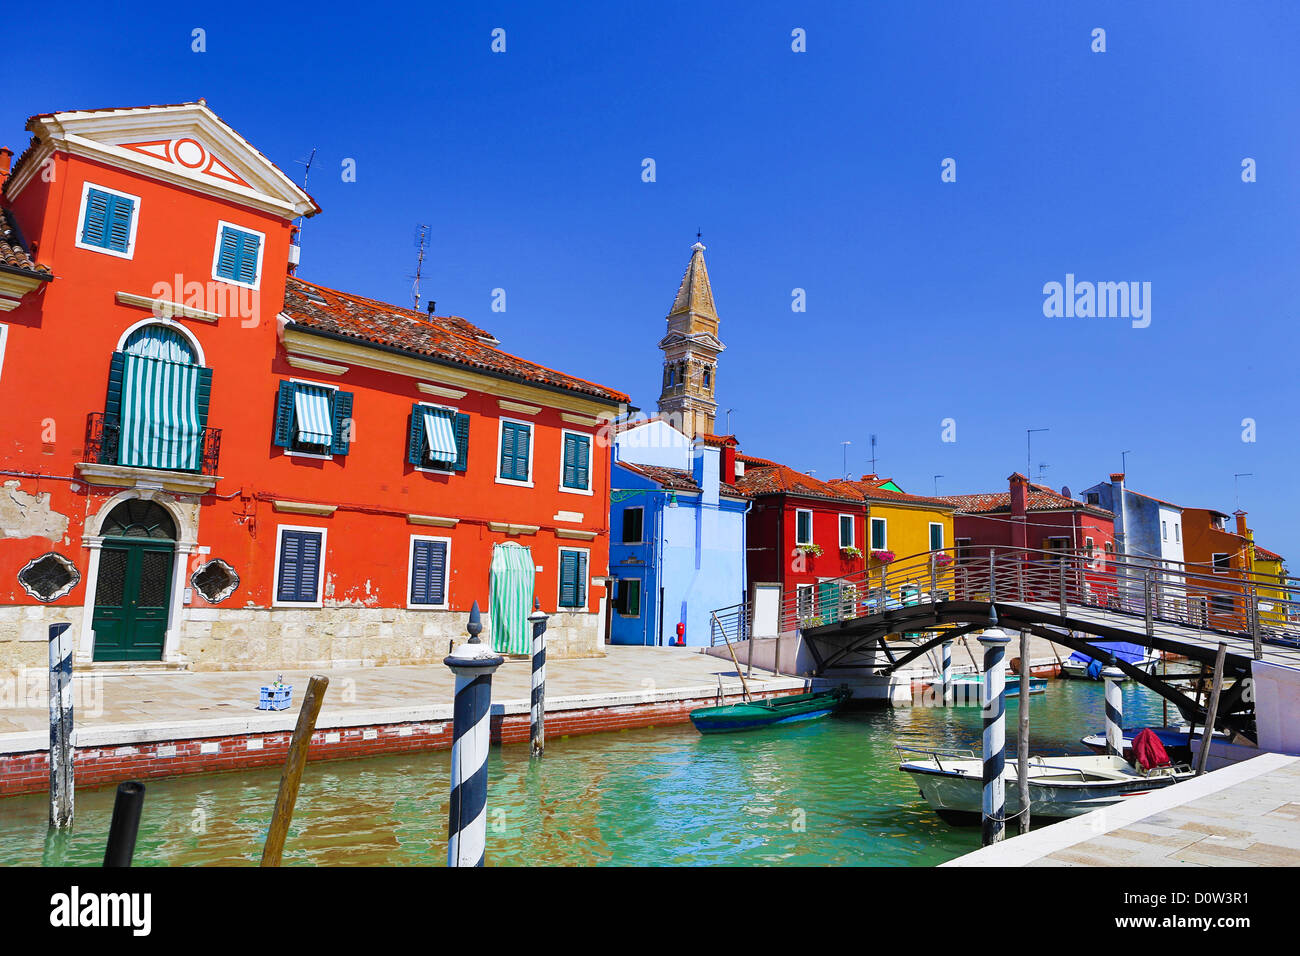 Italien, Europa, Reisen, Architektur, Boote, Burano, Kanal, bunt, Farben, Tourismus, Venedig, Turm Stockfoto